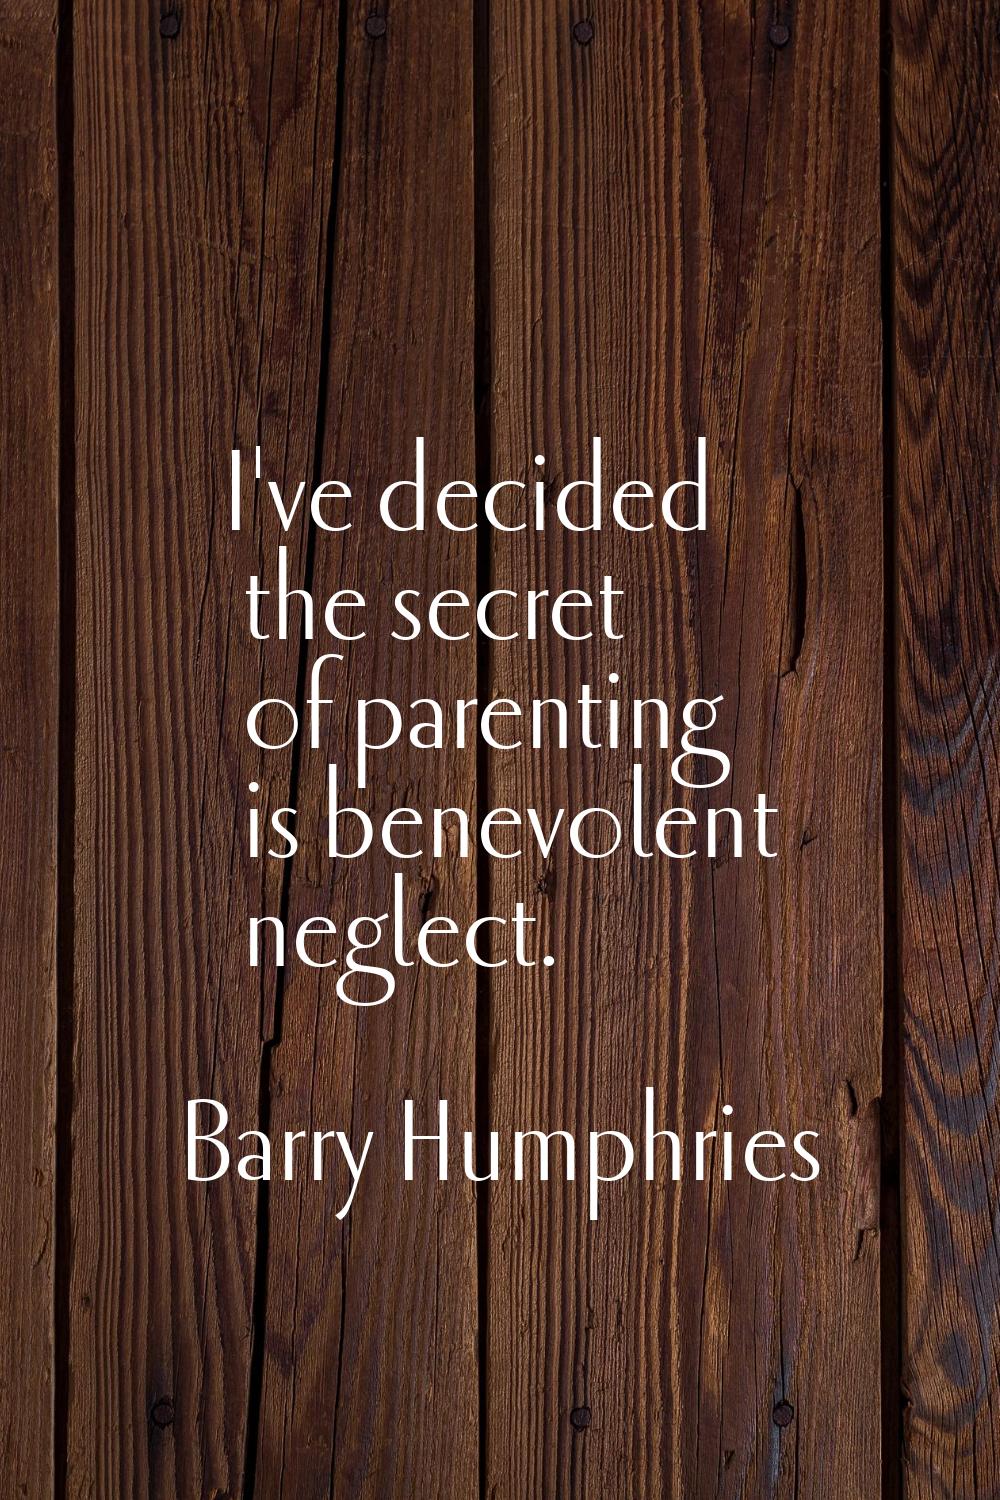 I've decided the secret of parenting is benevolent neglect.